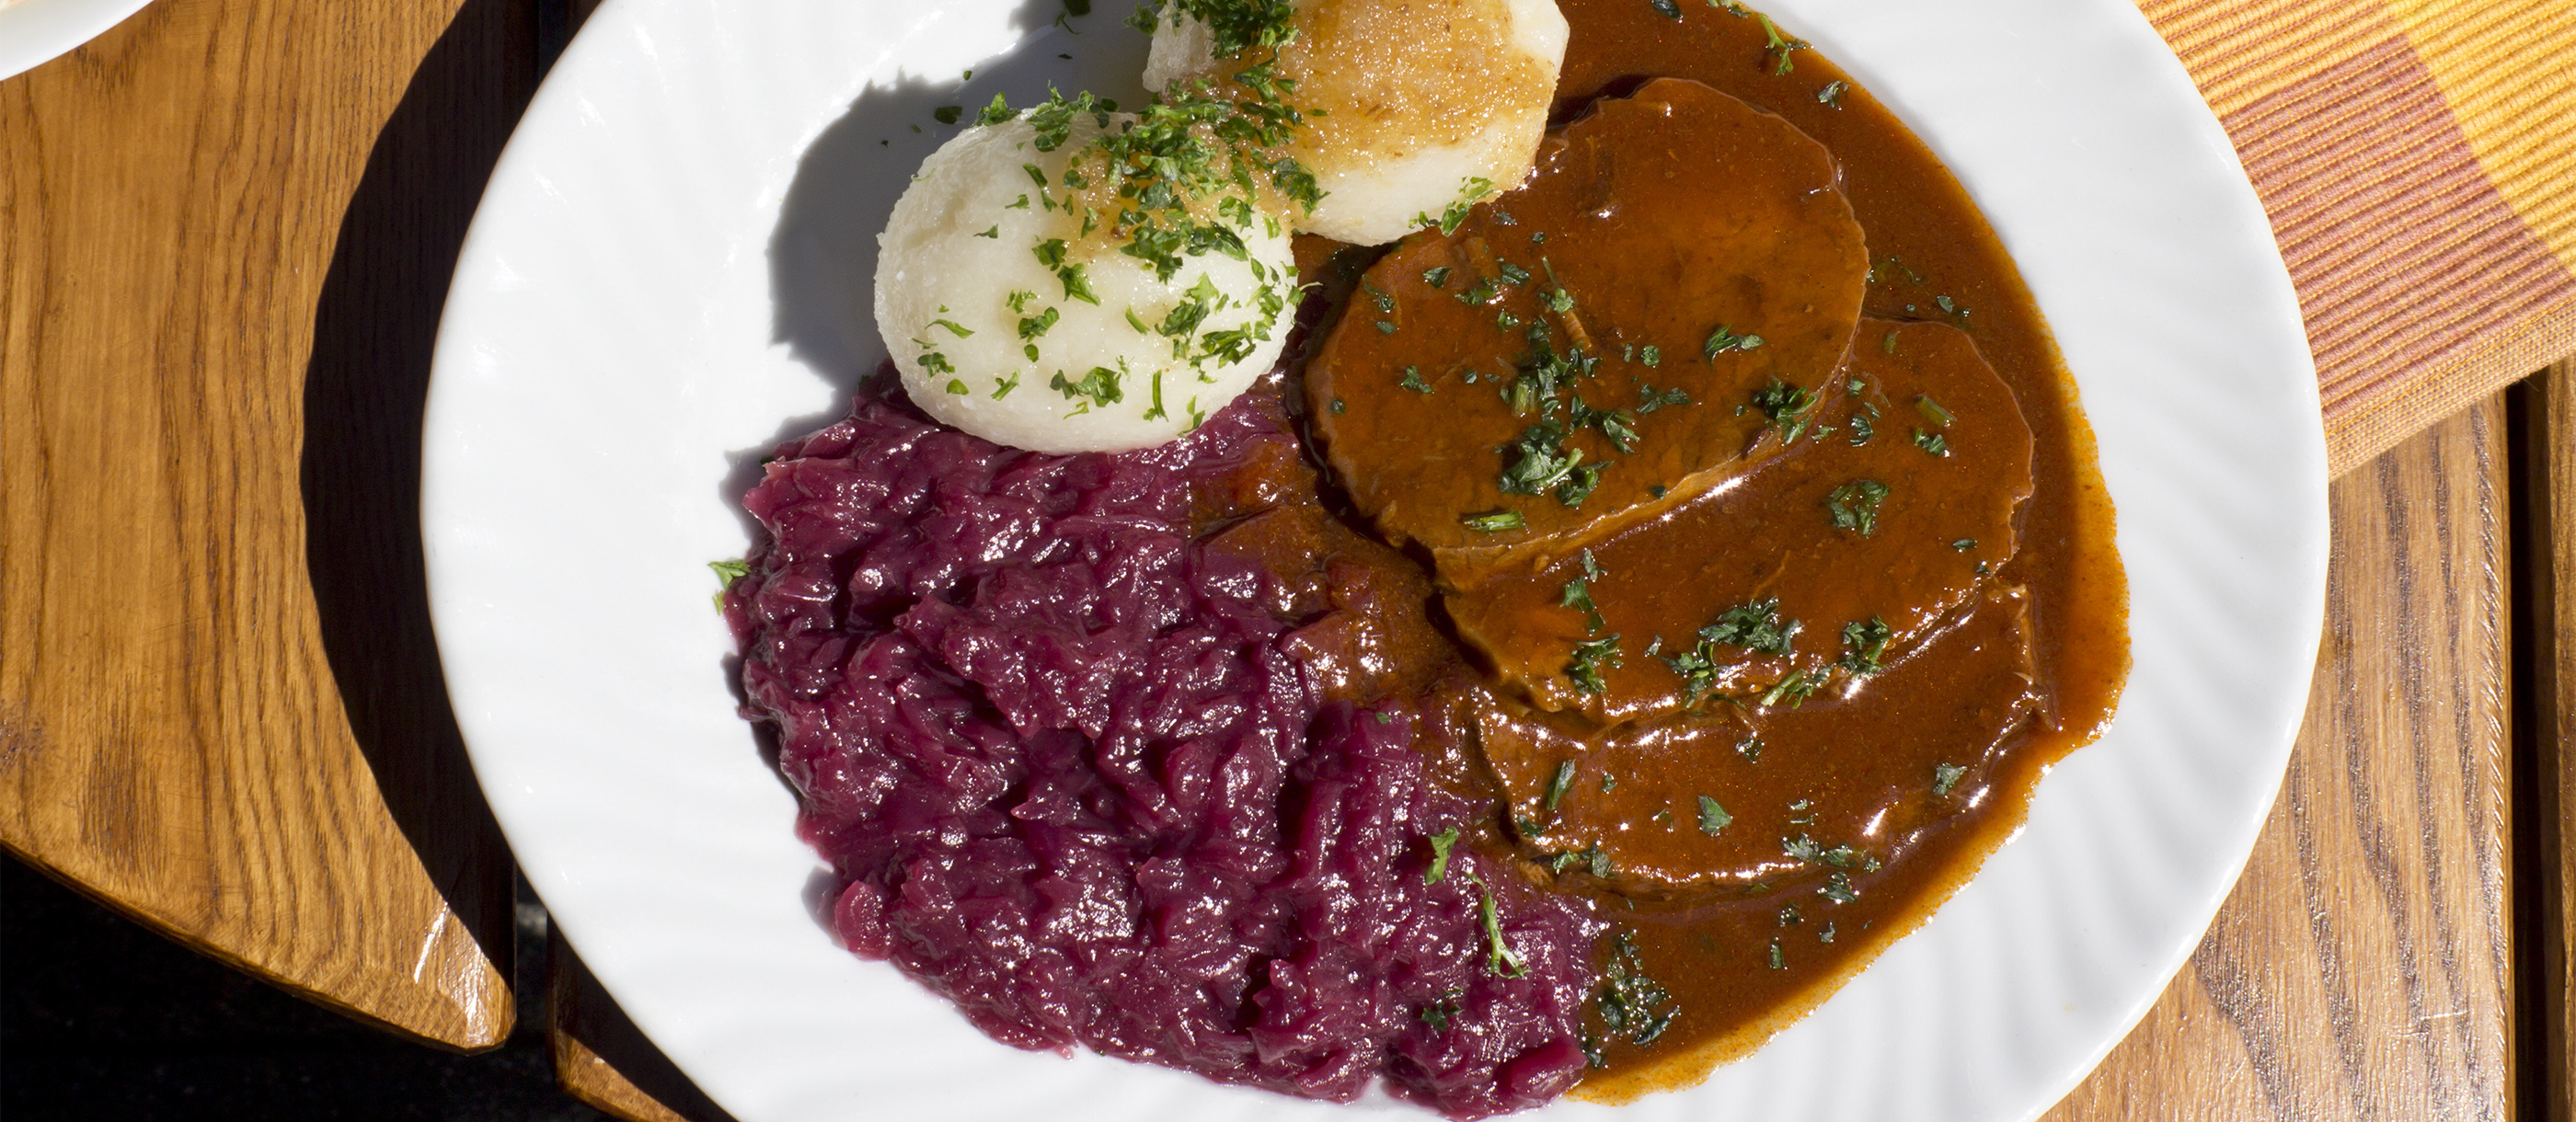 Sauerbraten | Traditional Beef Dish From Germany | TasteAtlas